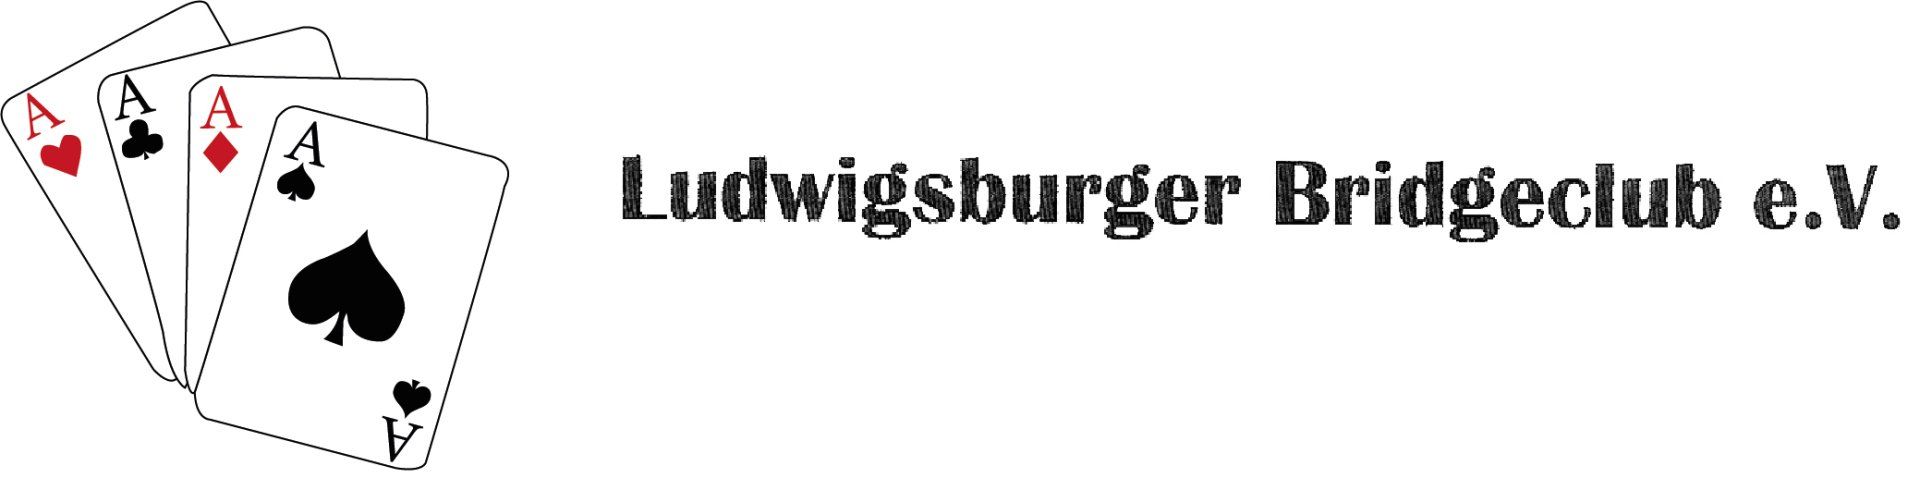 K Logistics BRIDGECLUB LUDWIGSBURG